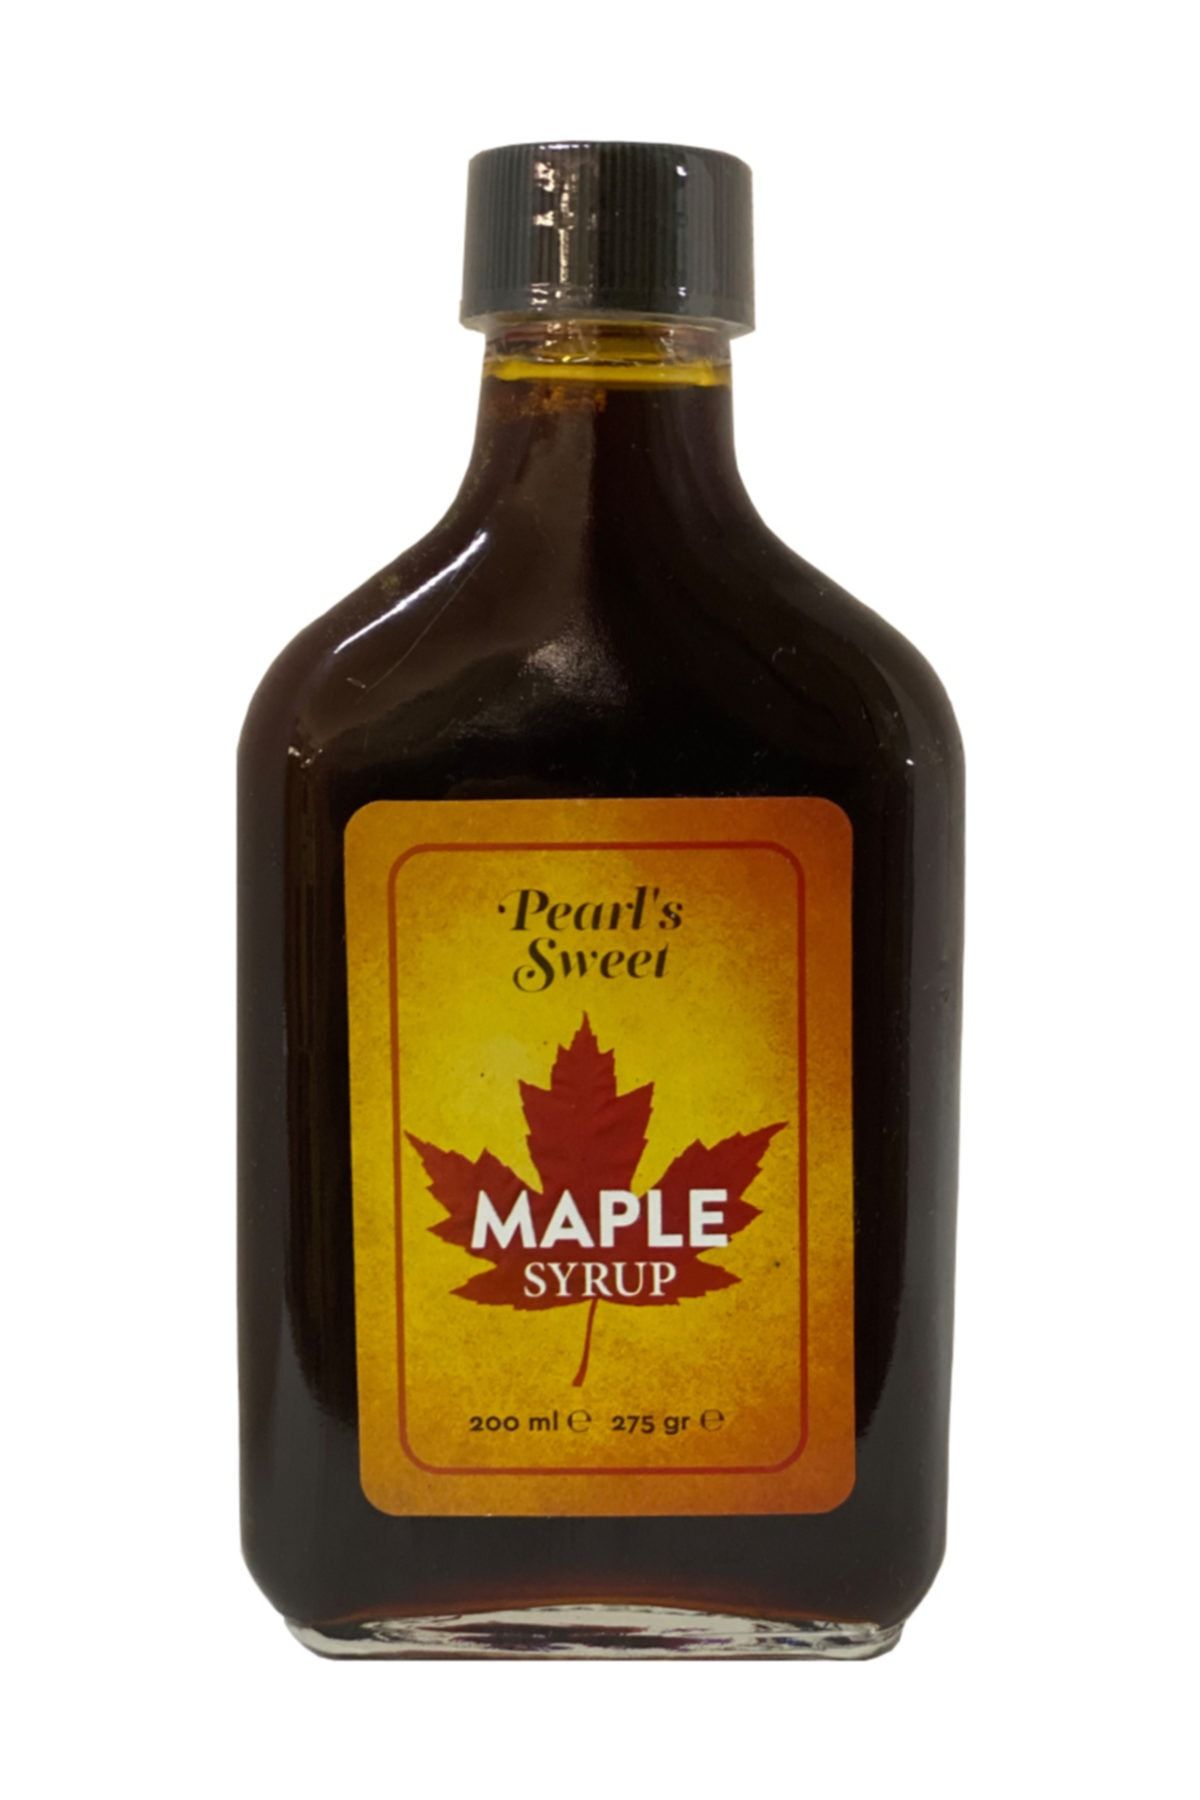 Sapori Pearl’s Sweet Maple Akçaağaç Şurubu, Maple Syrup, 200 ml 275 gr